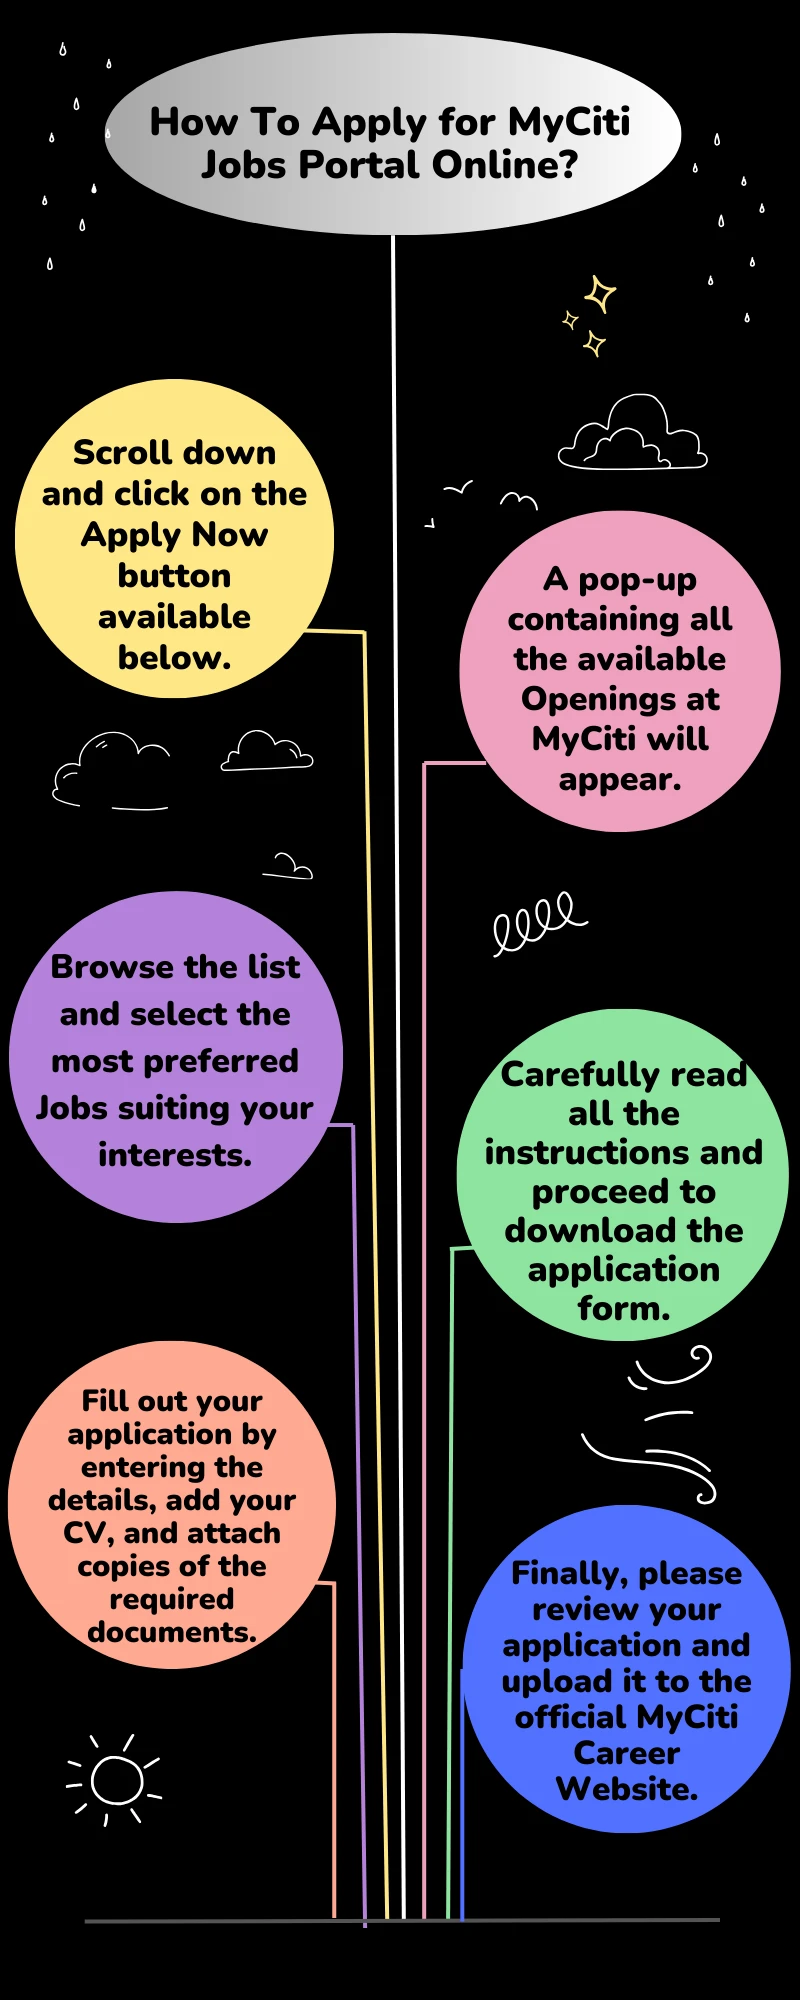 How To Apply for MyCiti Jobs Portal Online?